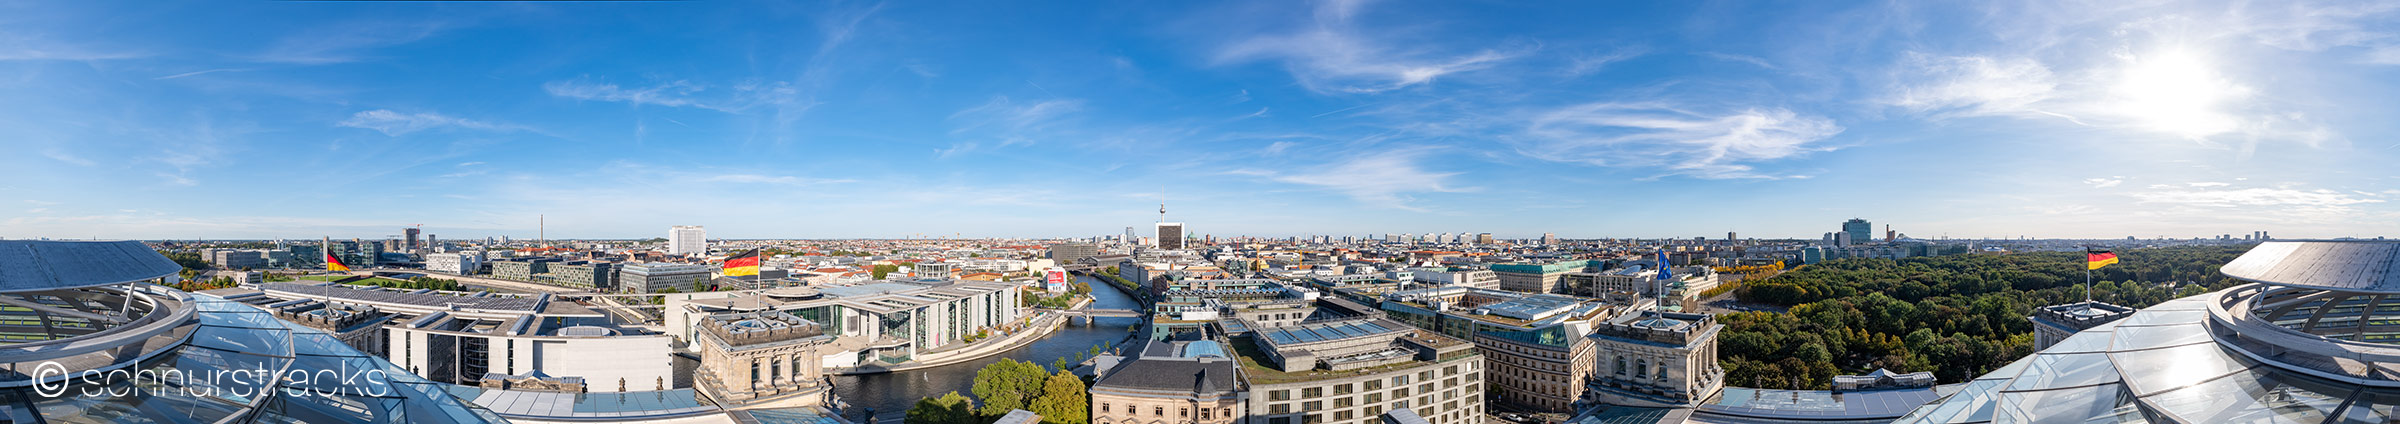 360°-Berlinpanorama 